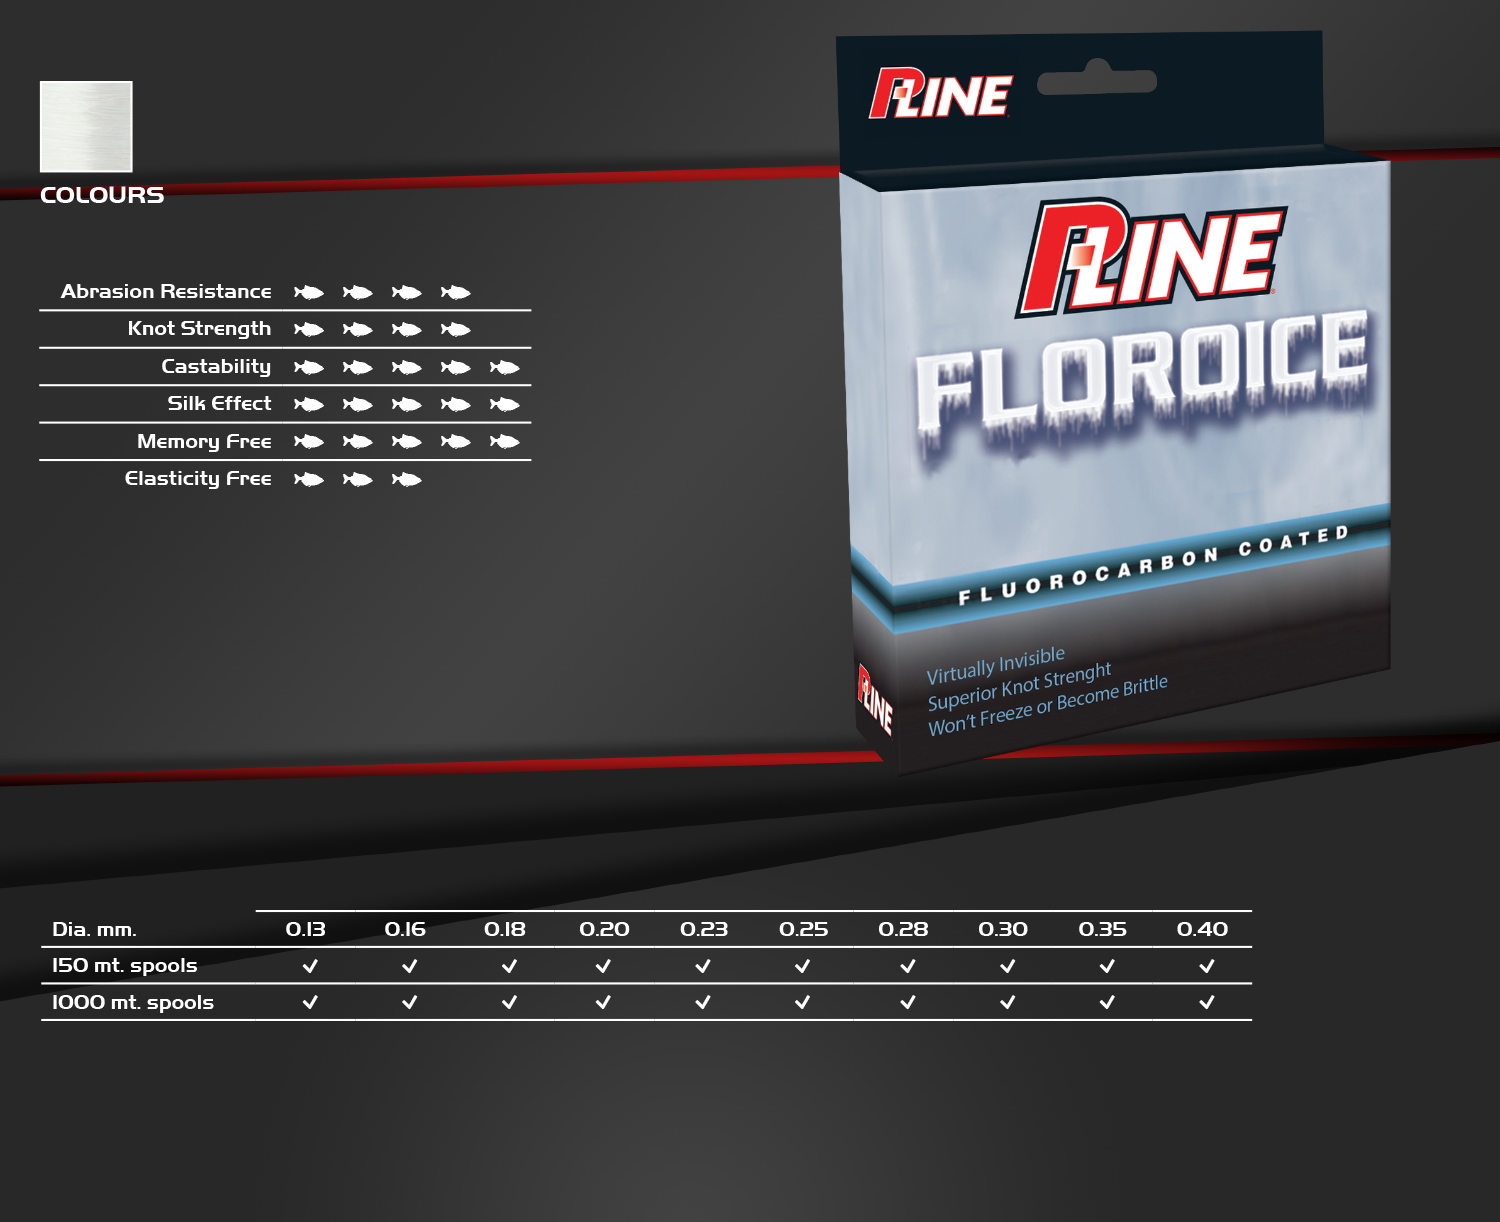 P-line Floroclear